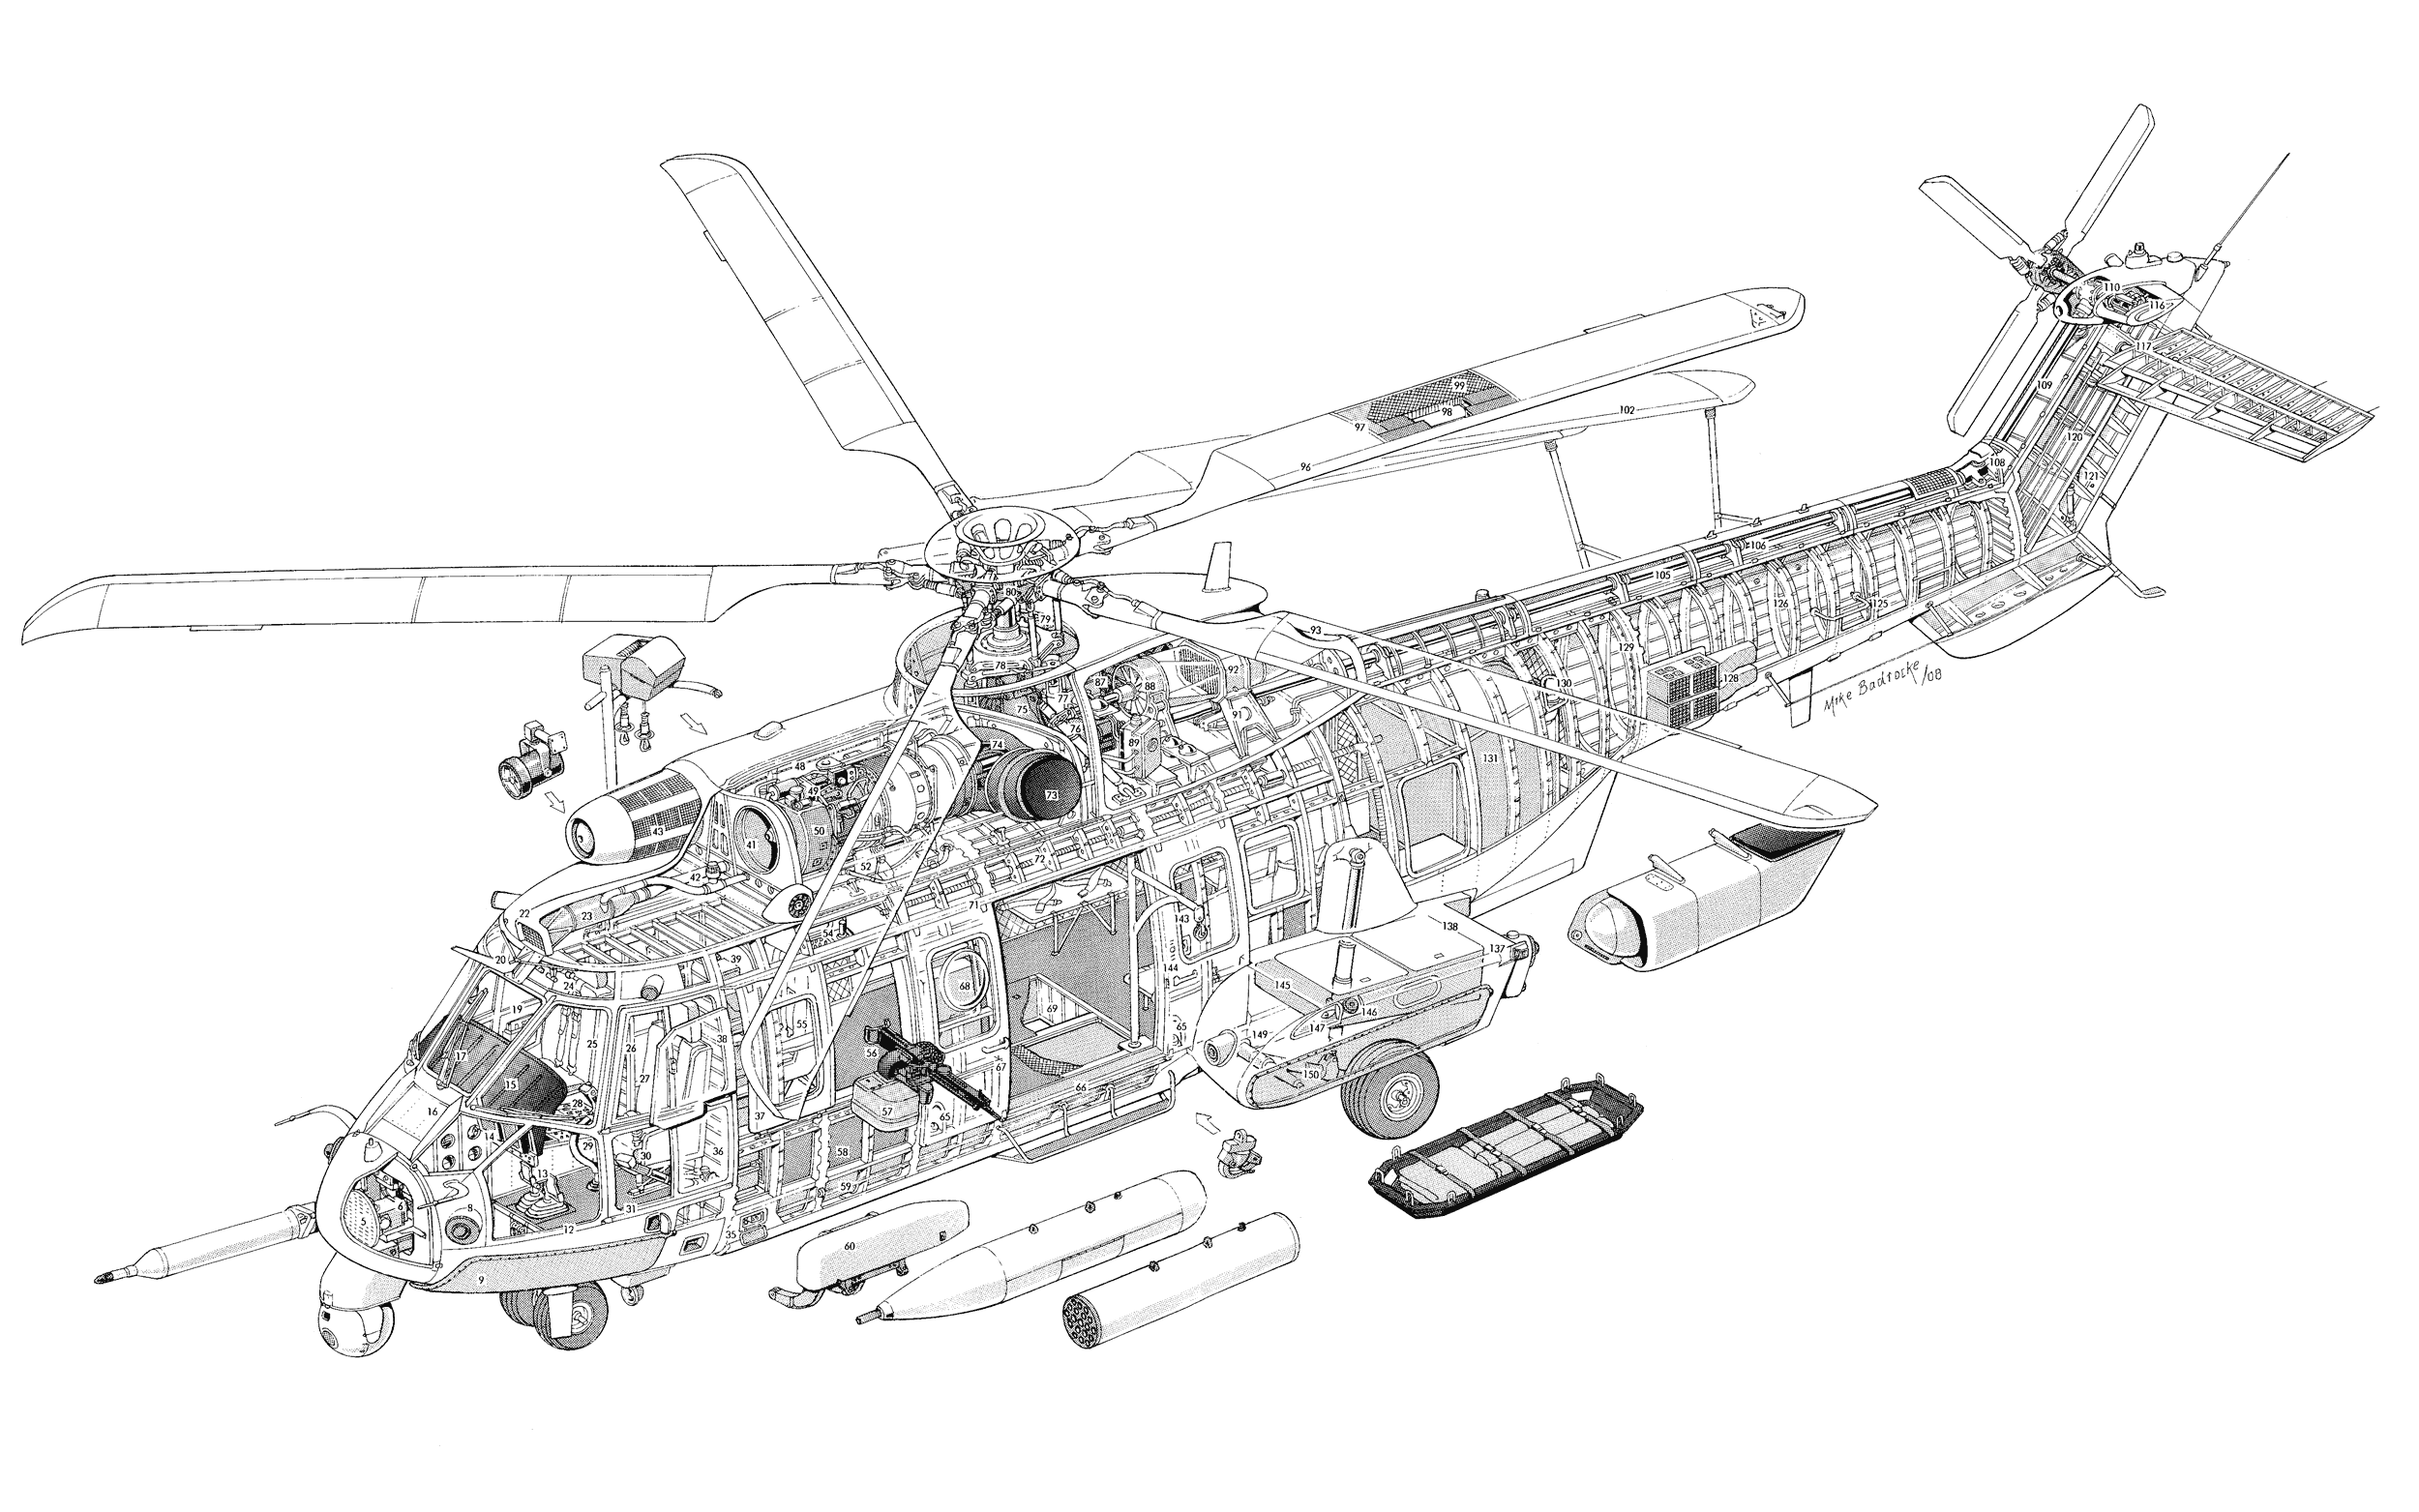 Eurocopter EC725 Cutaway Drawing in High quality